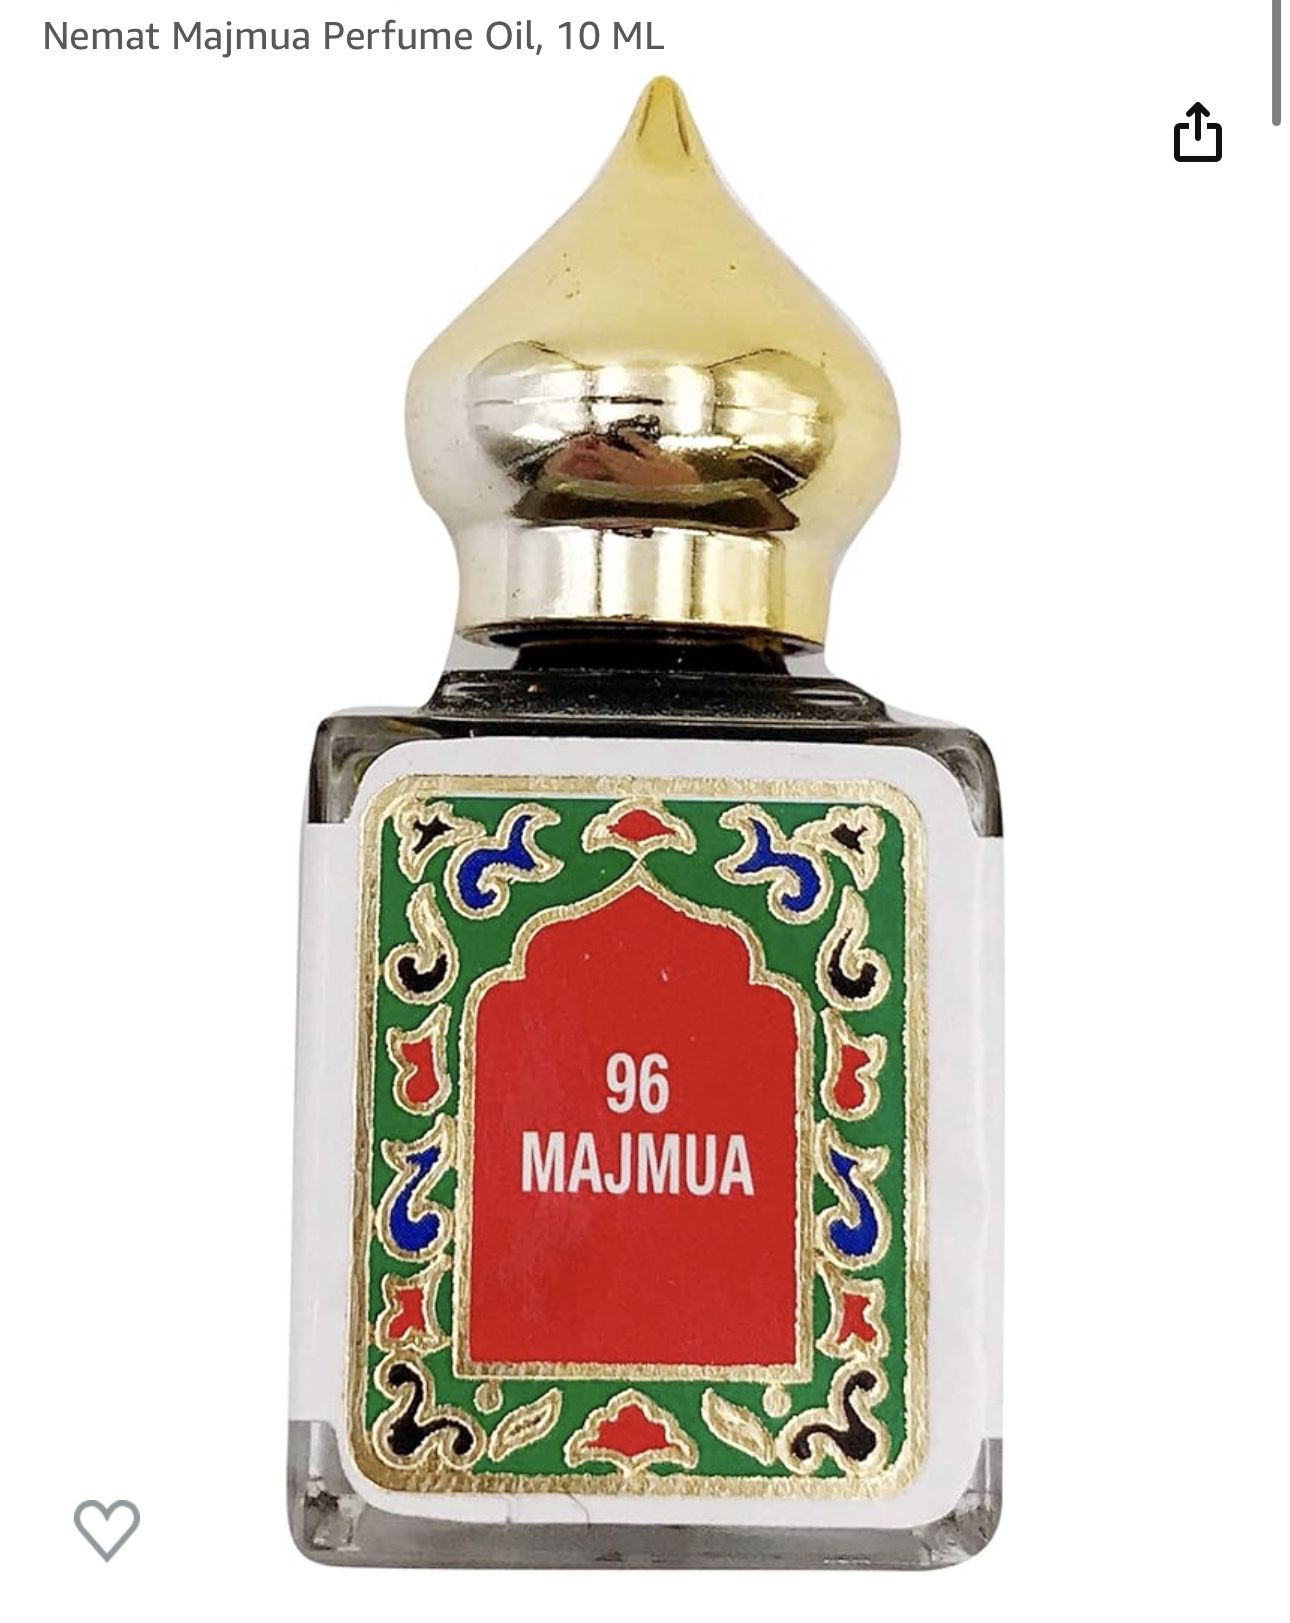 Nemat Majmua Perfume Oil, 10 ML